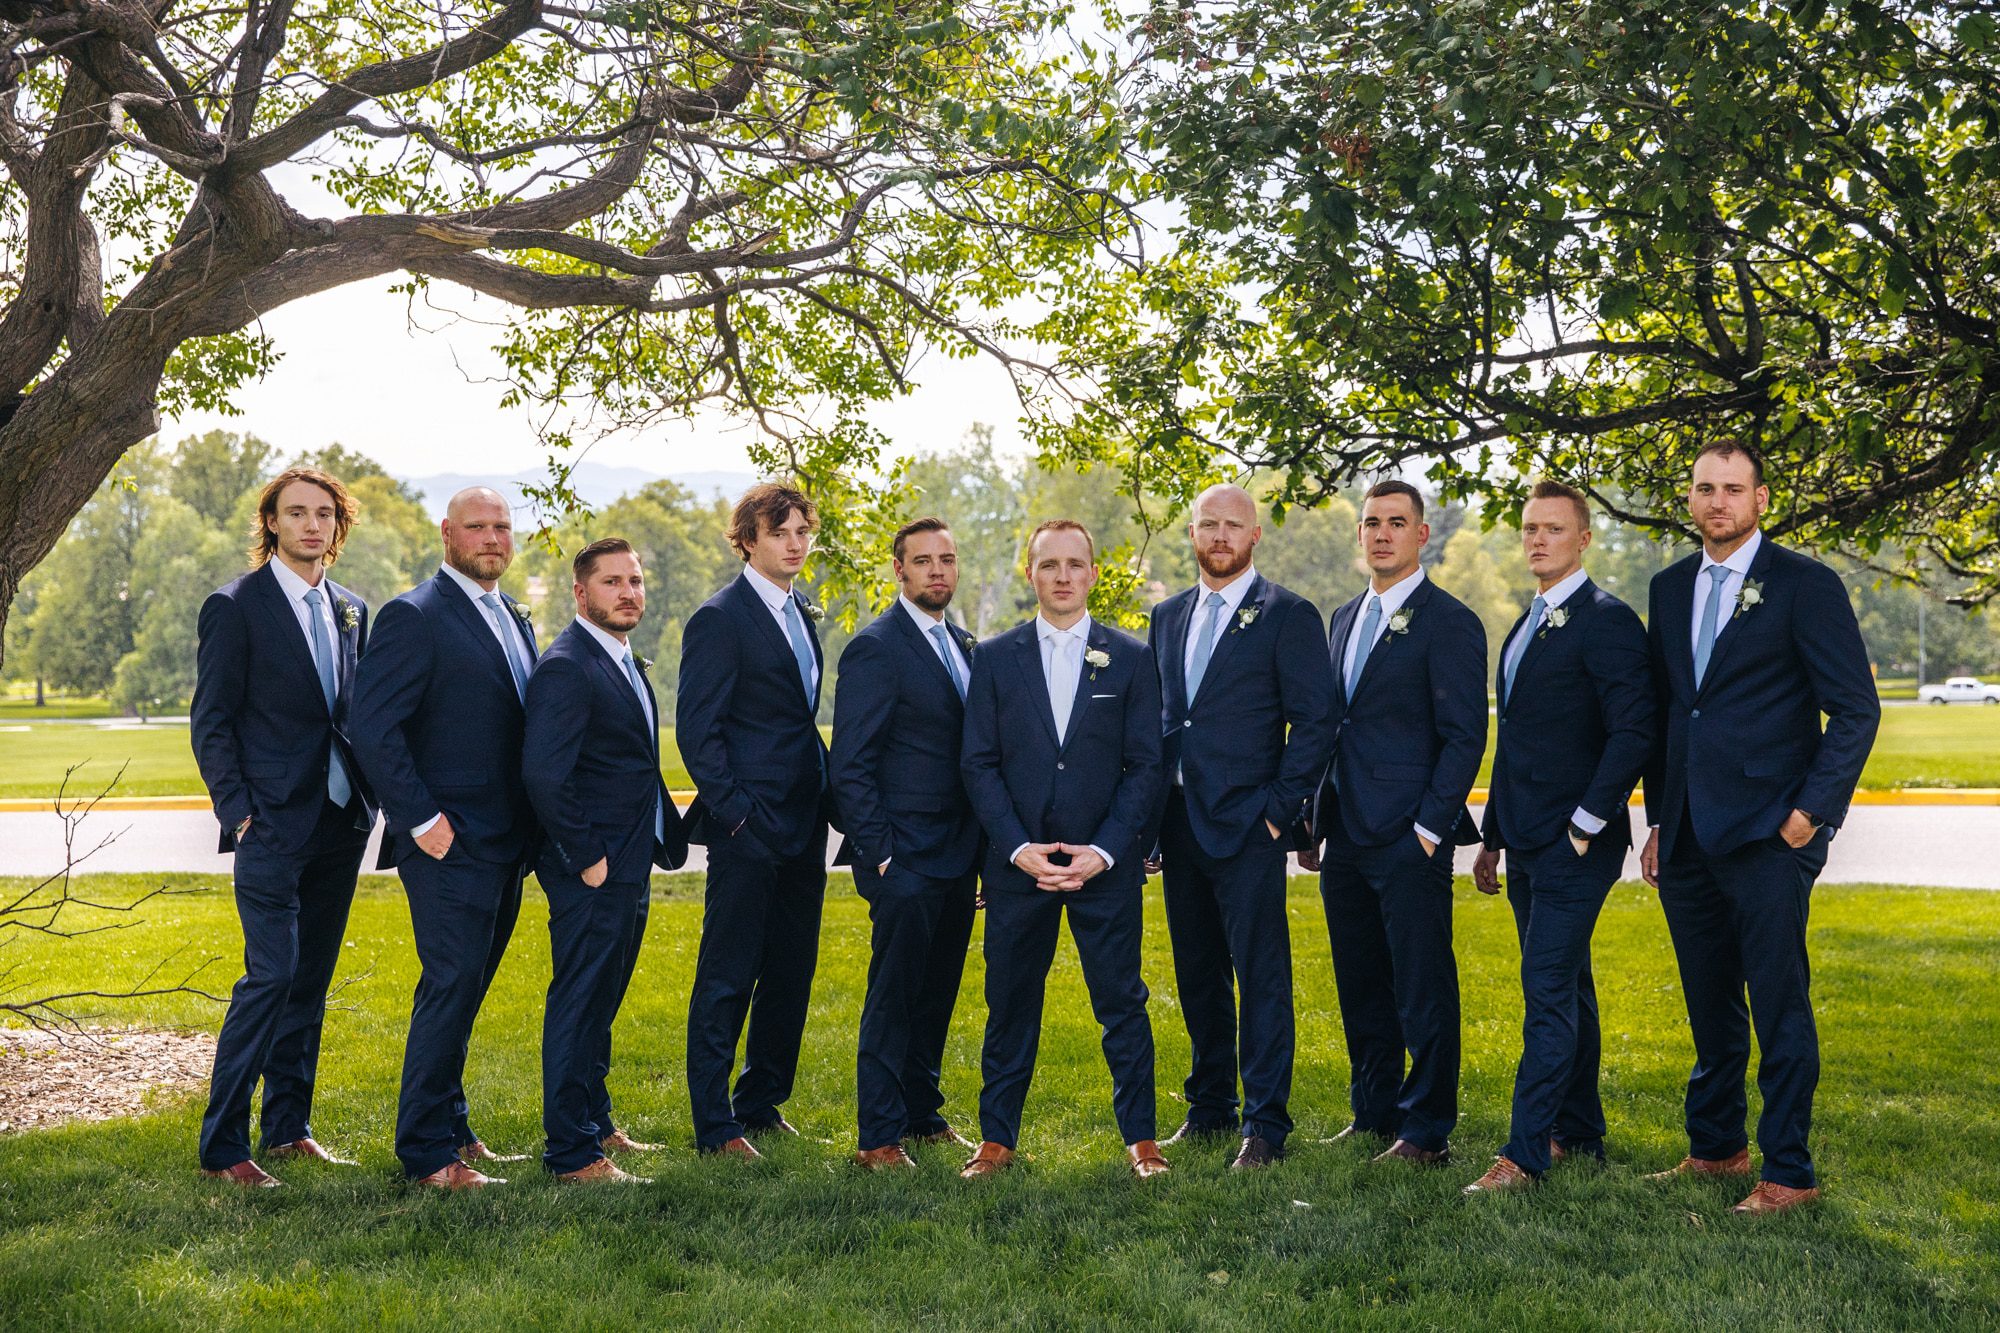 blue suit groomsmen, bride with groomsmen, light blue ties groomsmen, Cheeseman Park, Cheeseman Park wedding, denver wedding, denver wedding venues, outdoor wedding denver